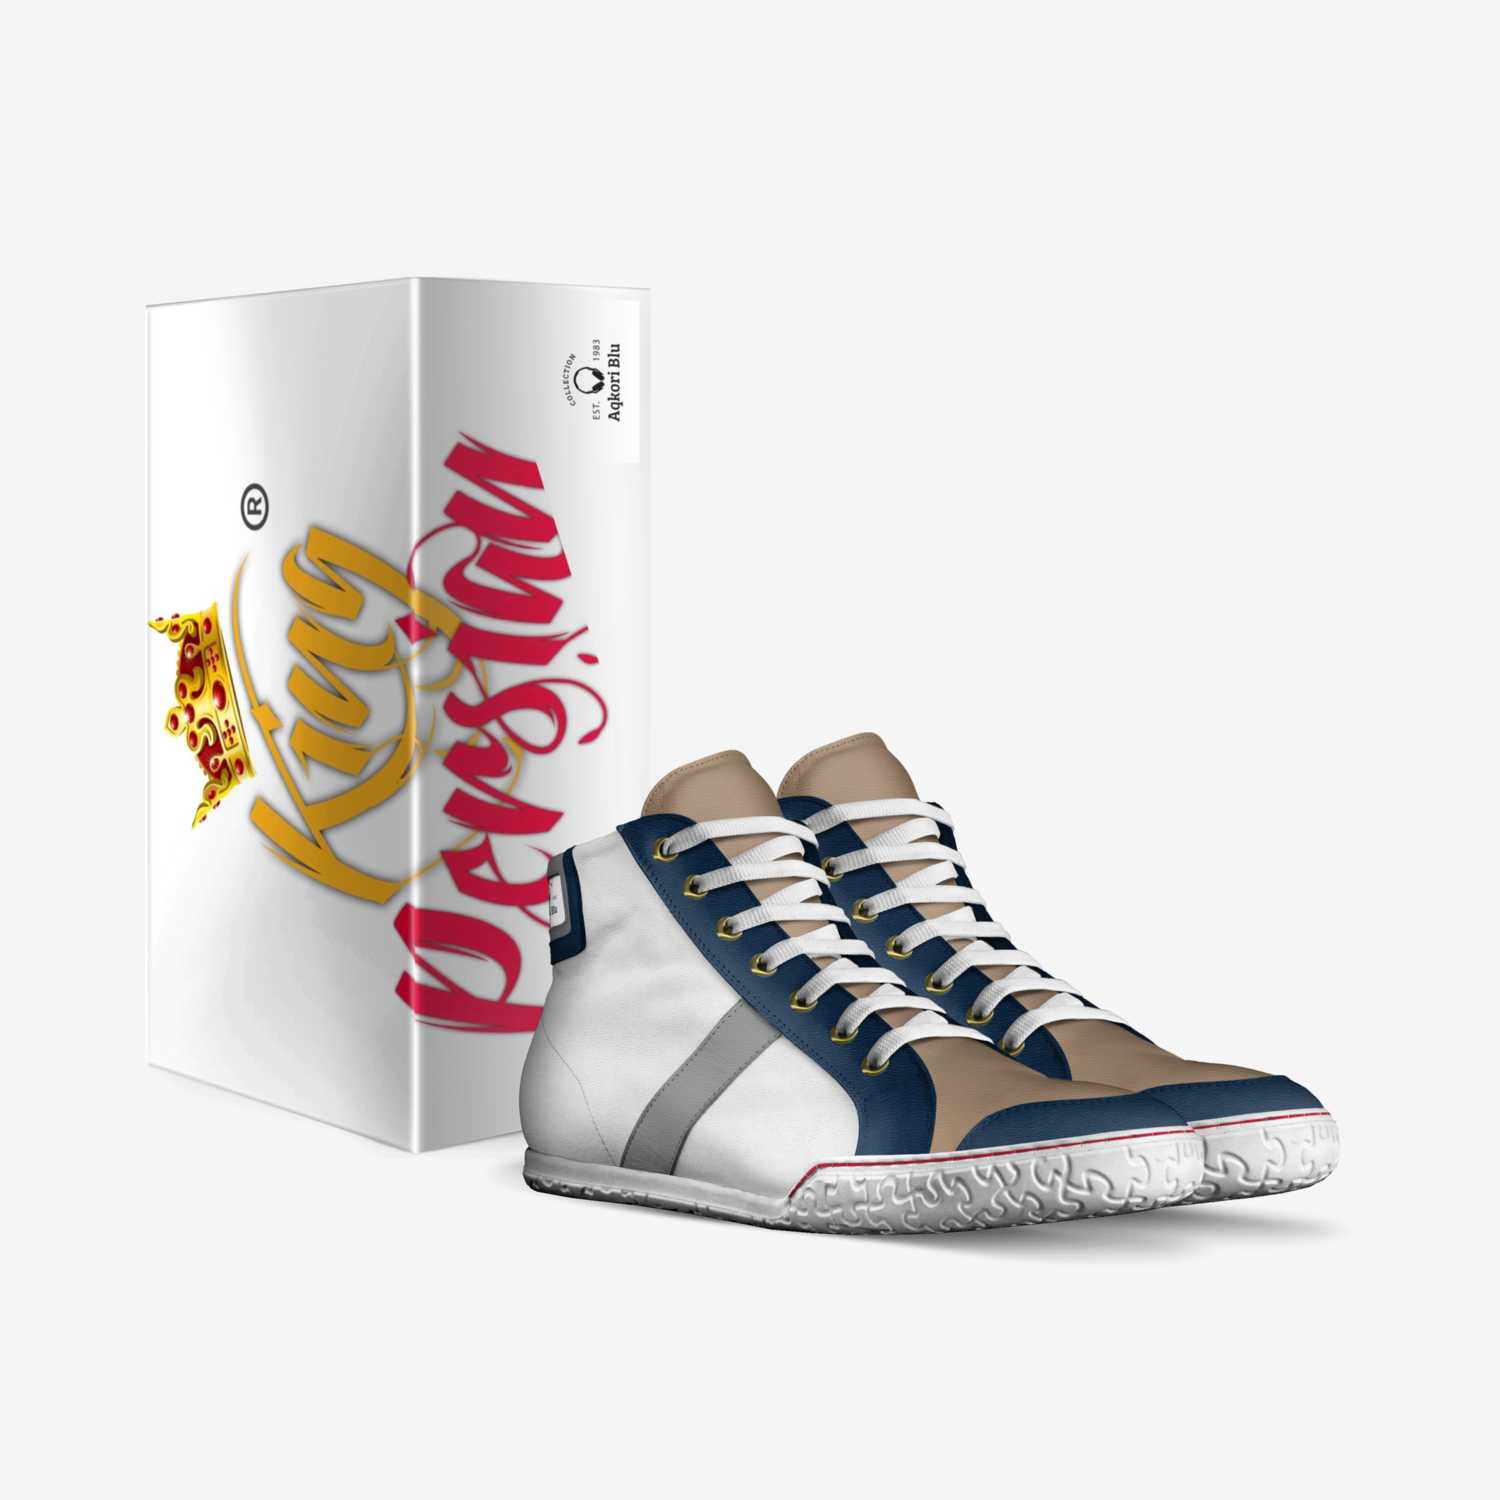 Aqkori Blu custom made in Italy shoes by Kiing Perzian | Box view